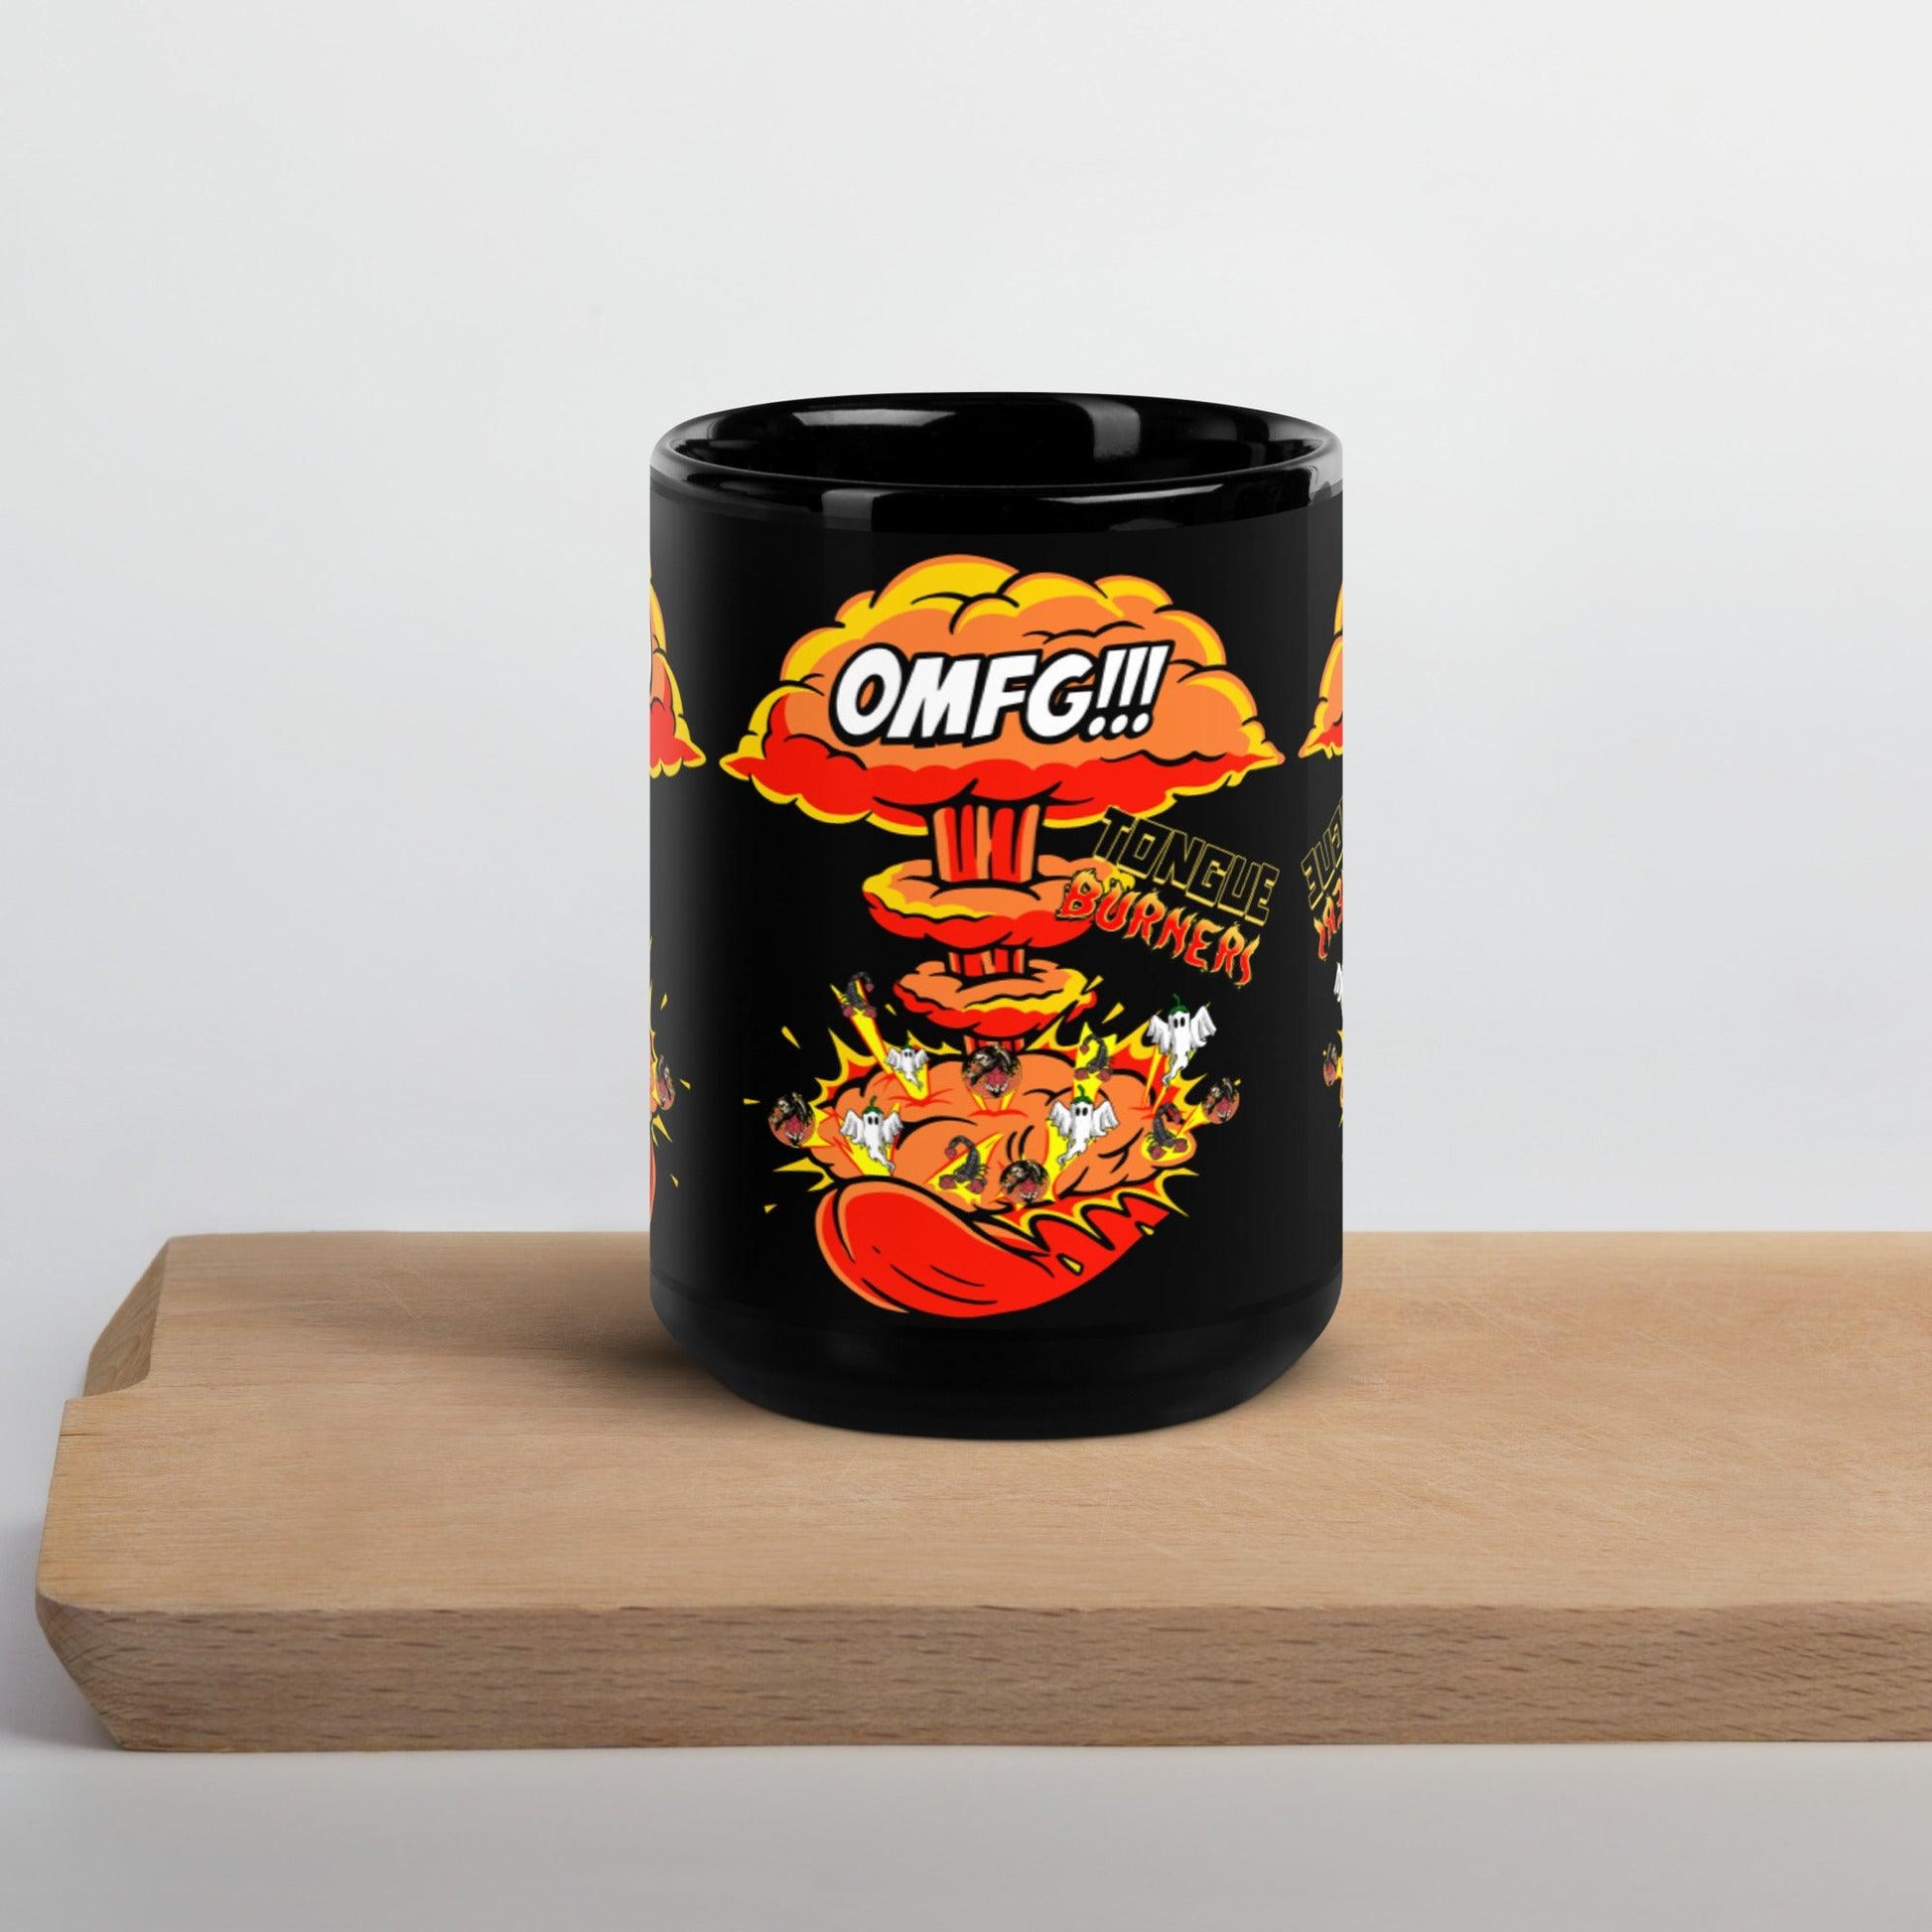 OMFG!!! Black Glossy Mug - Tongue Burners Hot Sauce